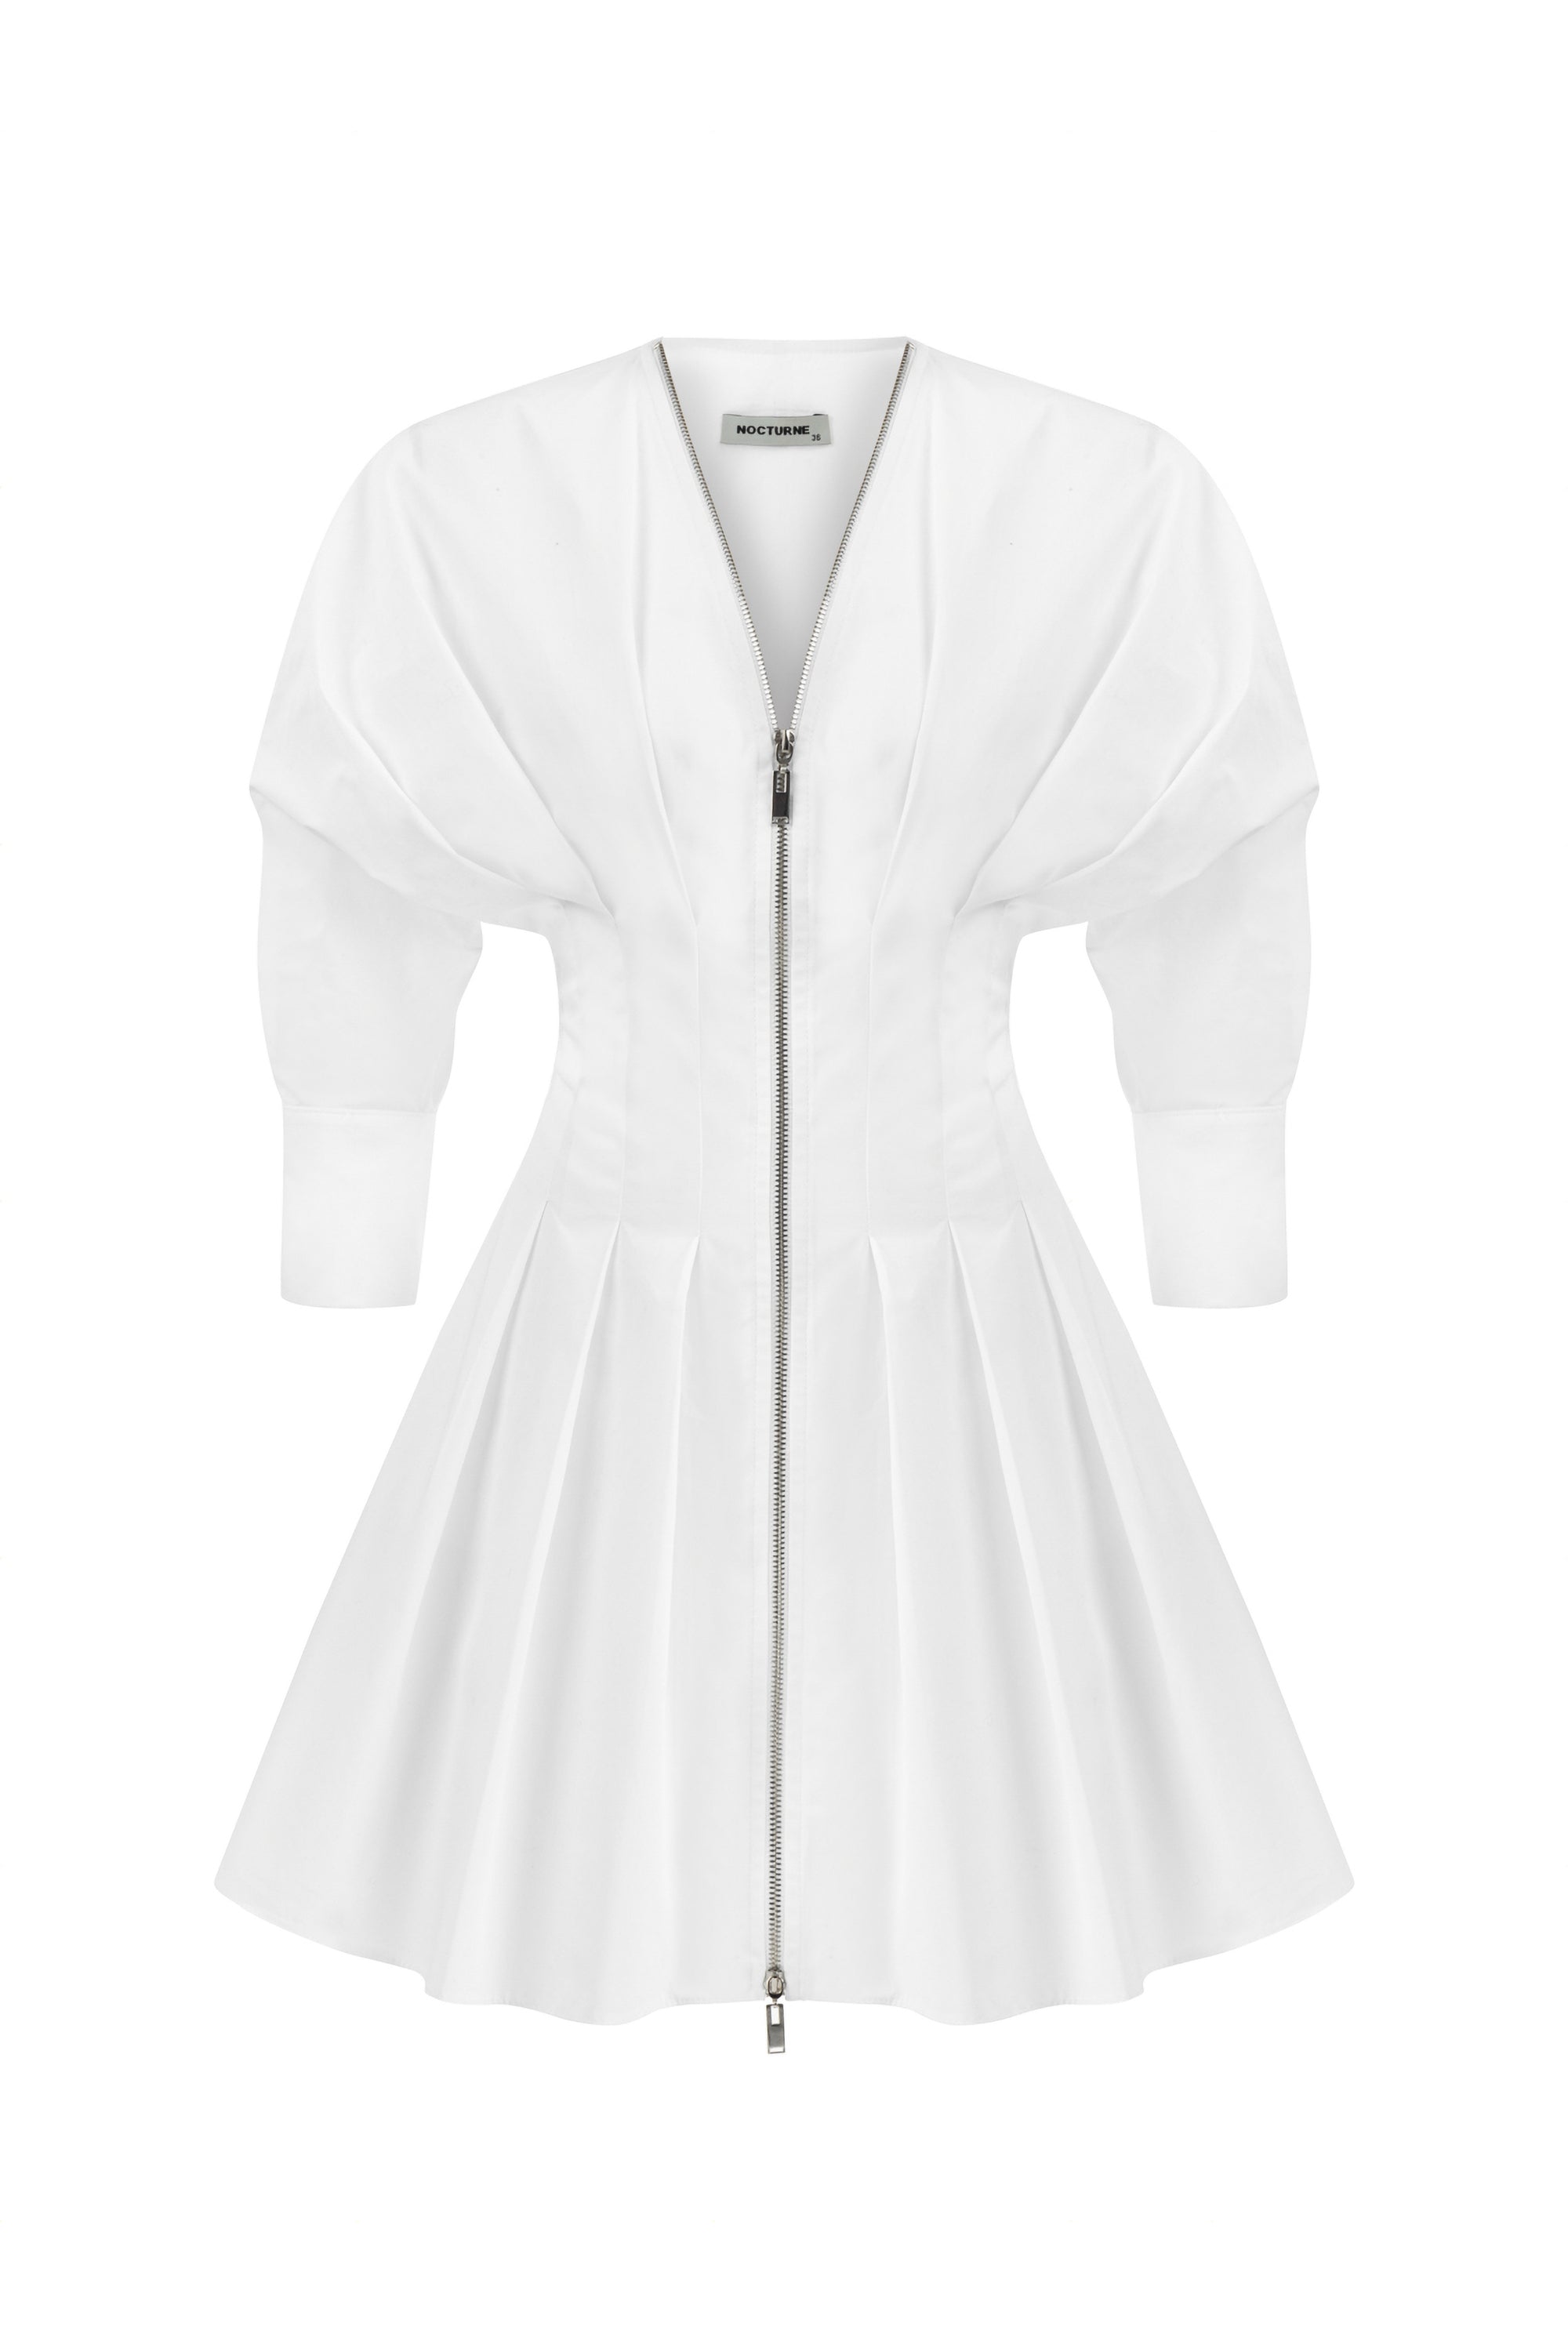 Nocturne Women's White Zippered Dress